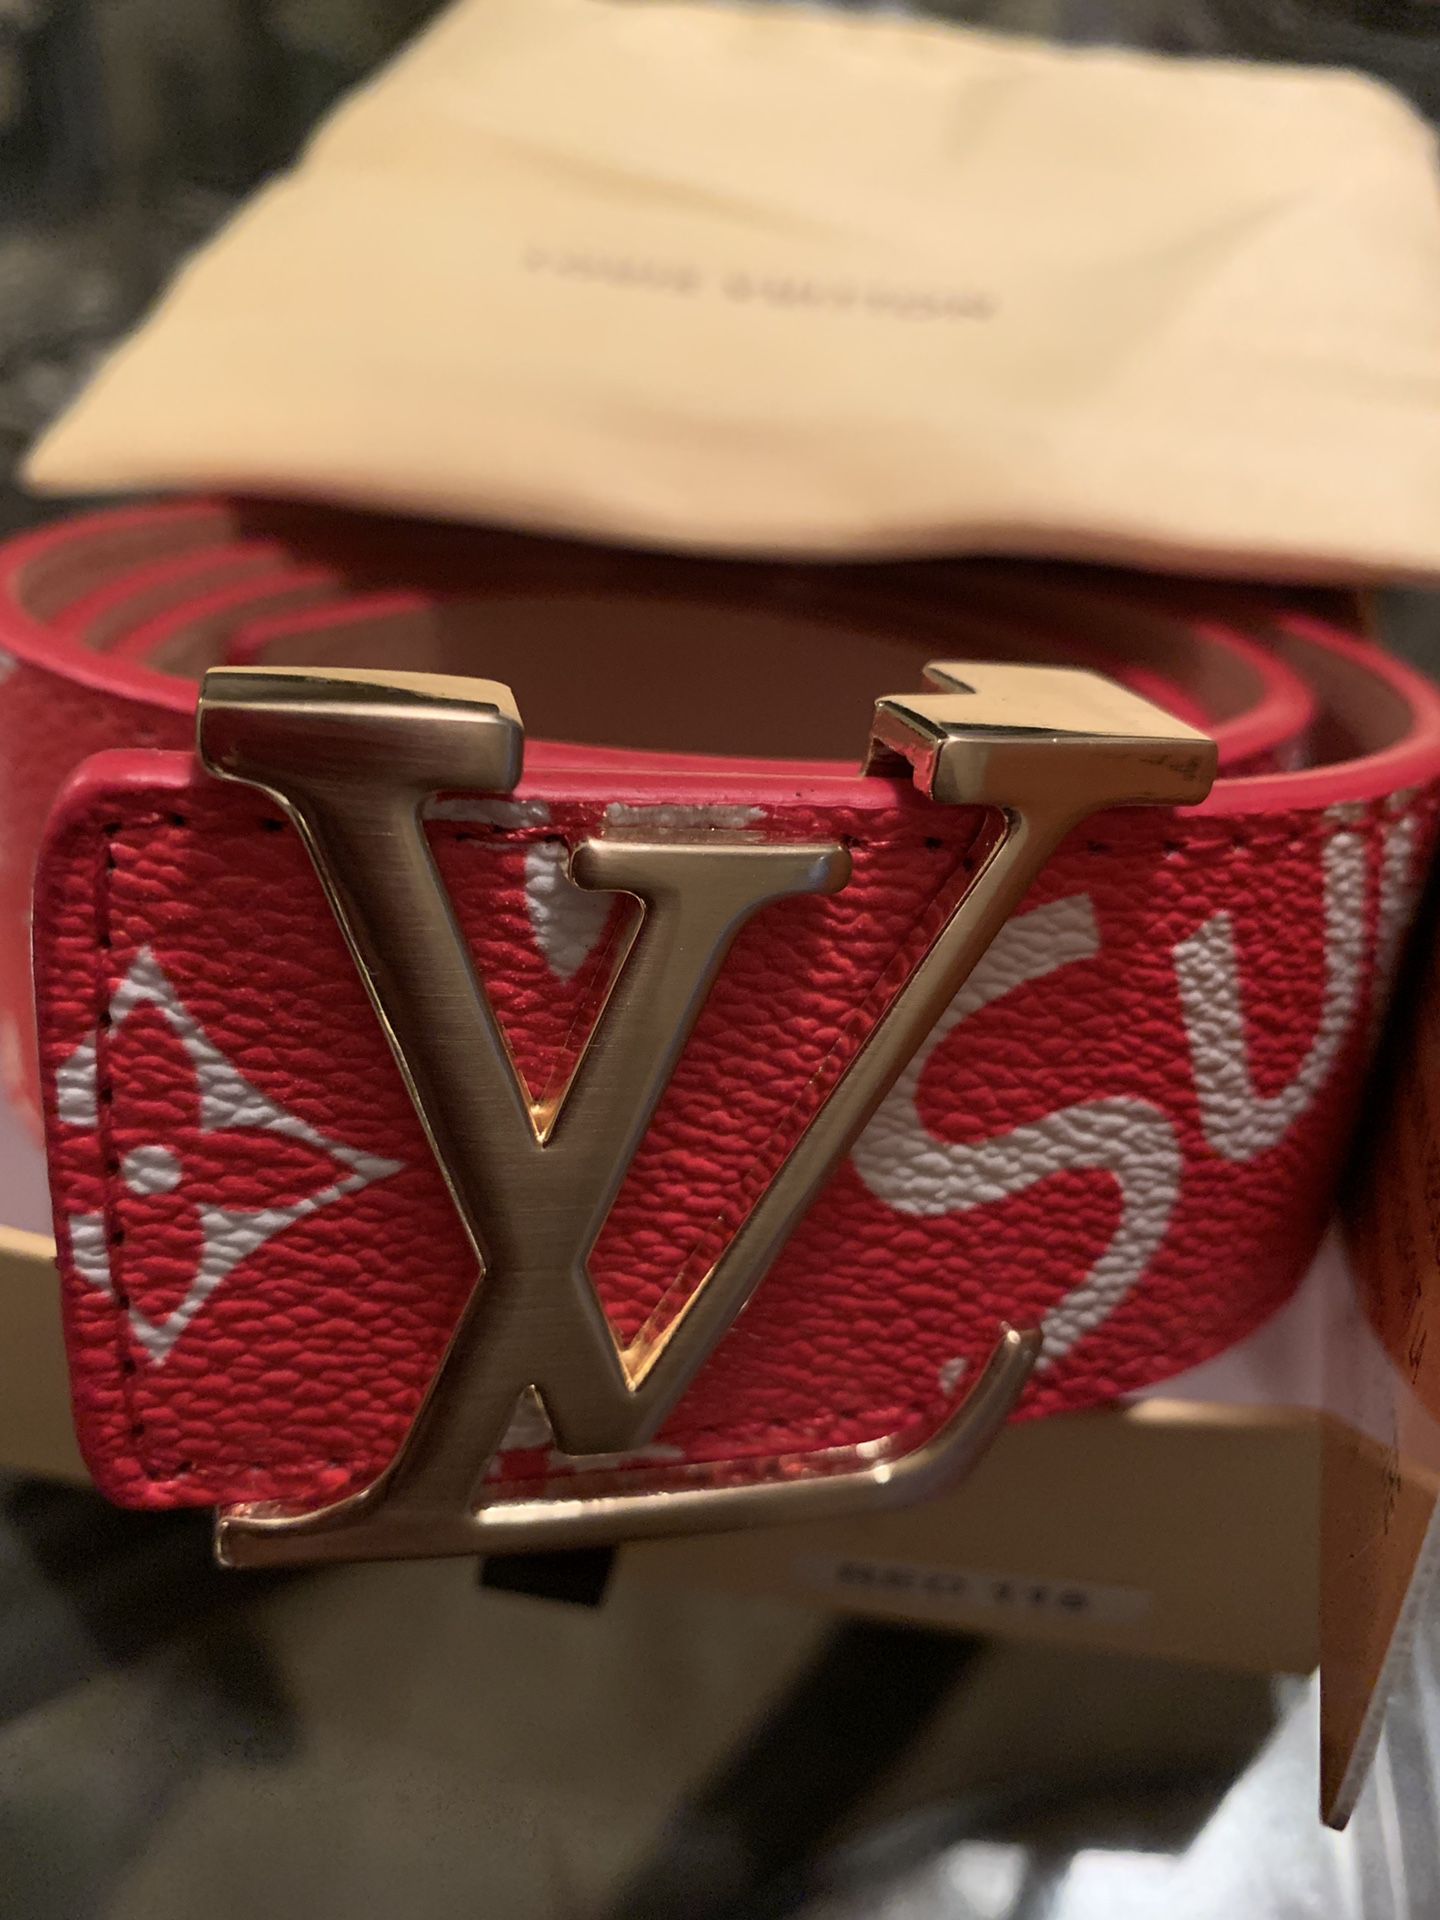 Louis Vuitton x Supreme Monogram Belt Black Size 30-33 (42/105) for Sale in  Conyers, GA - OfferUp